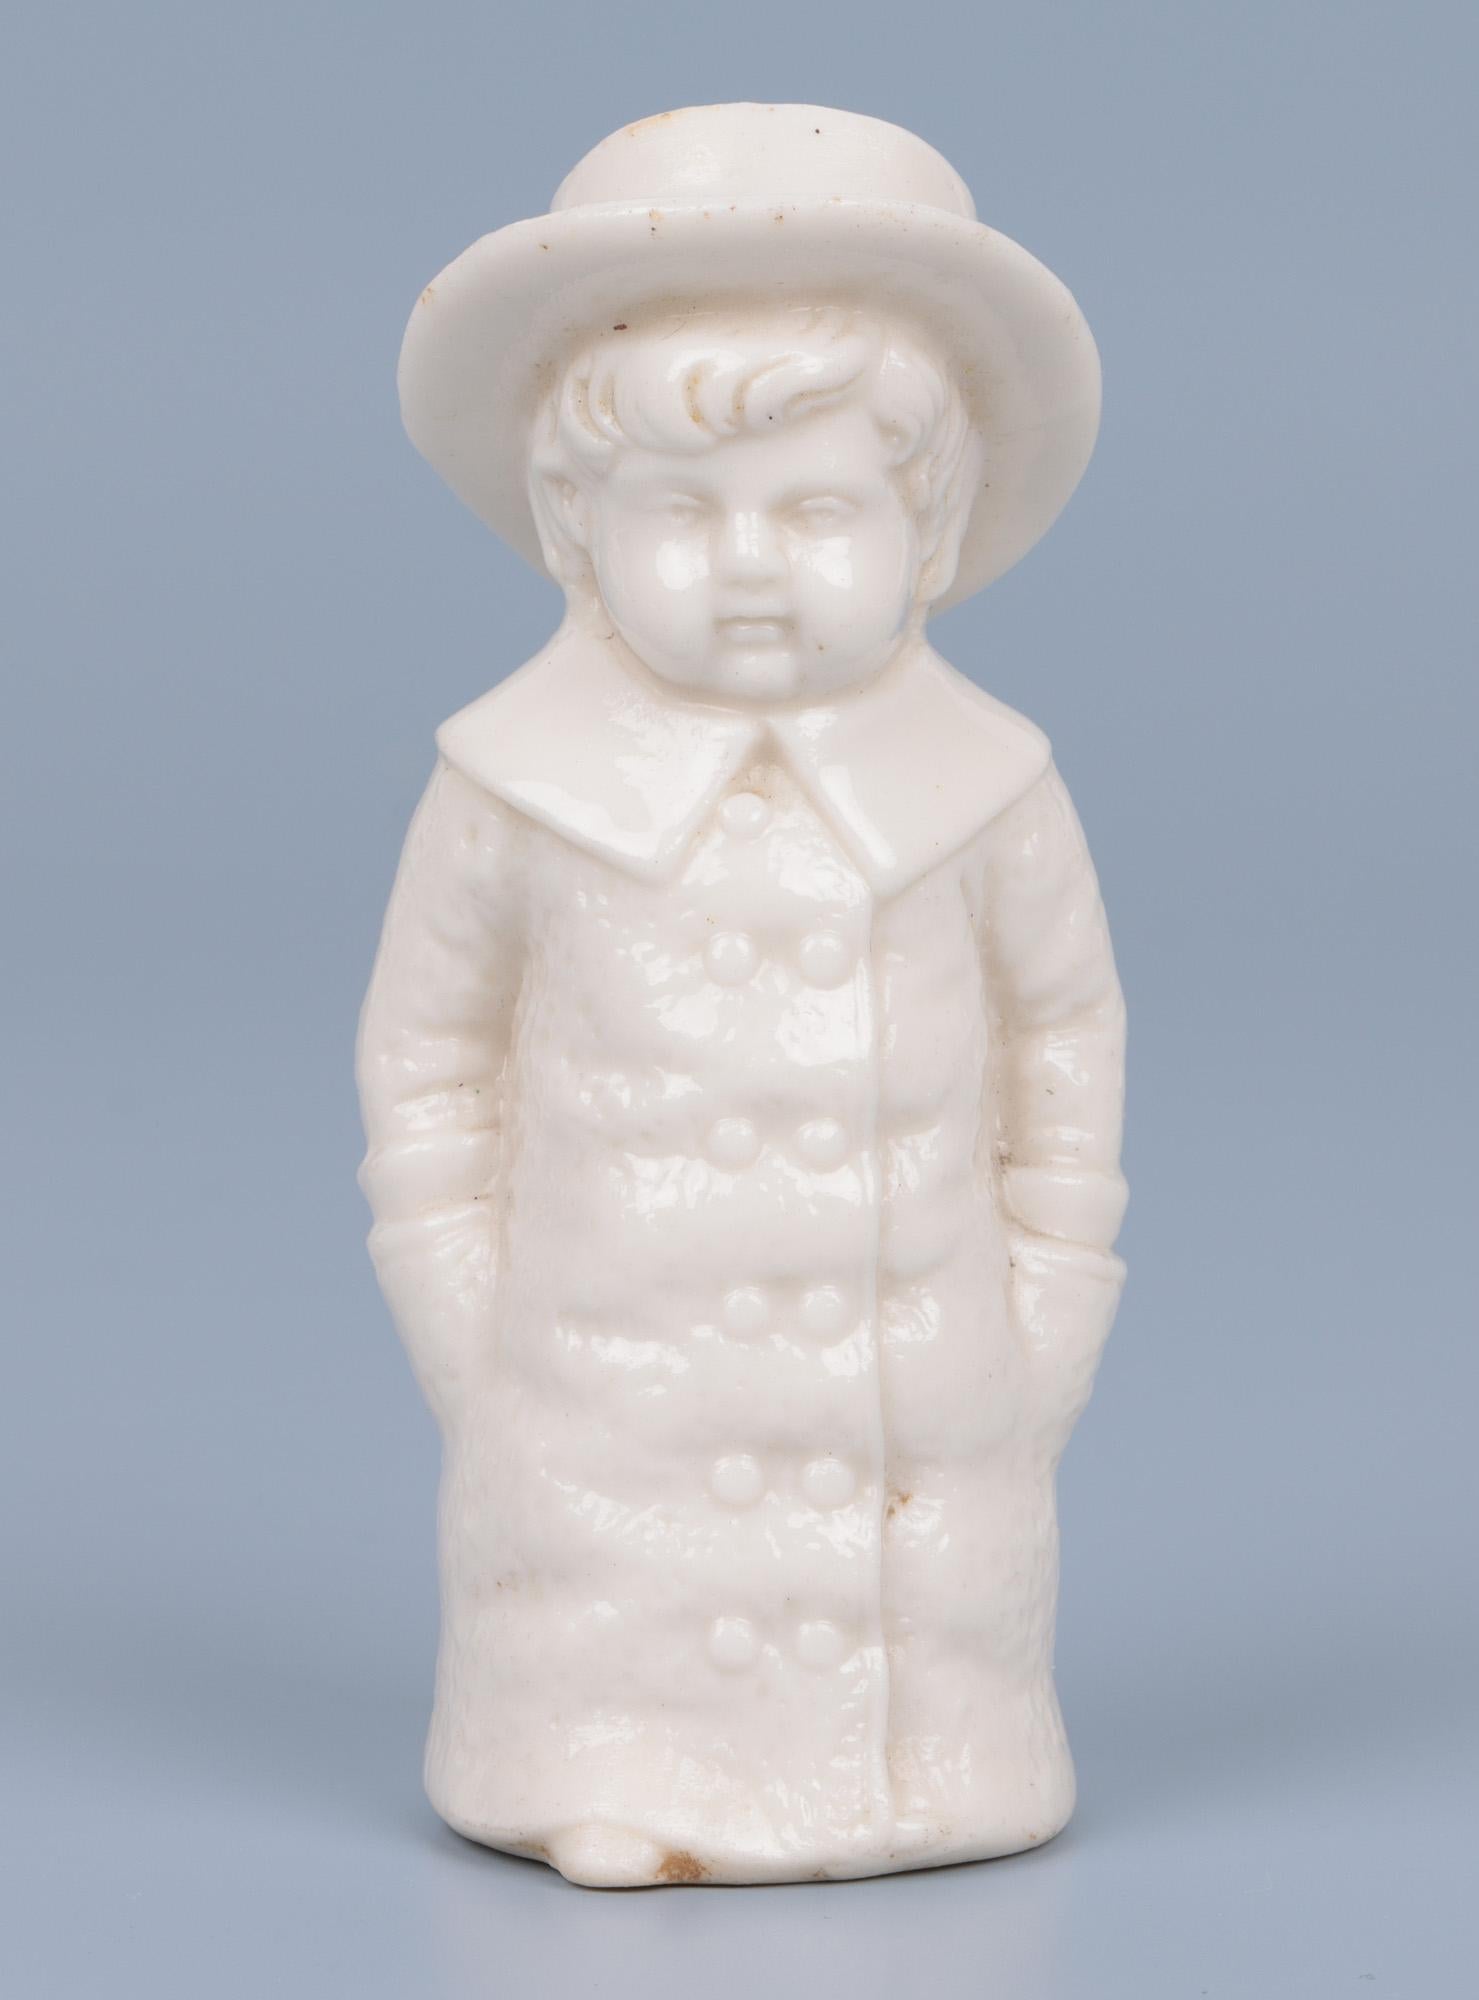 Antique English Porcelain Boy in Hat Pepper or Pounce Pot For Sale 3